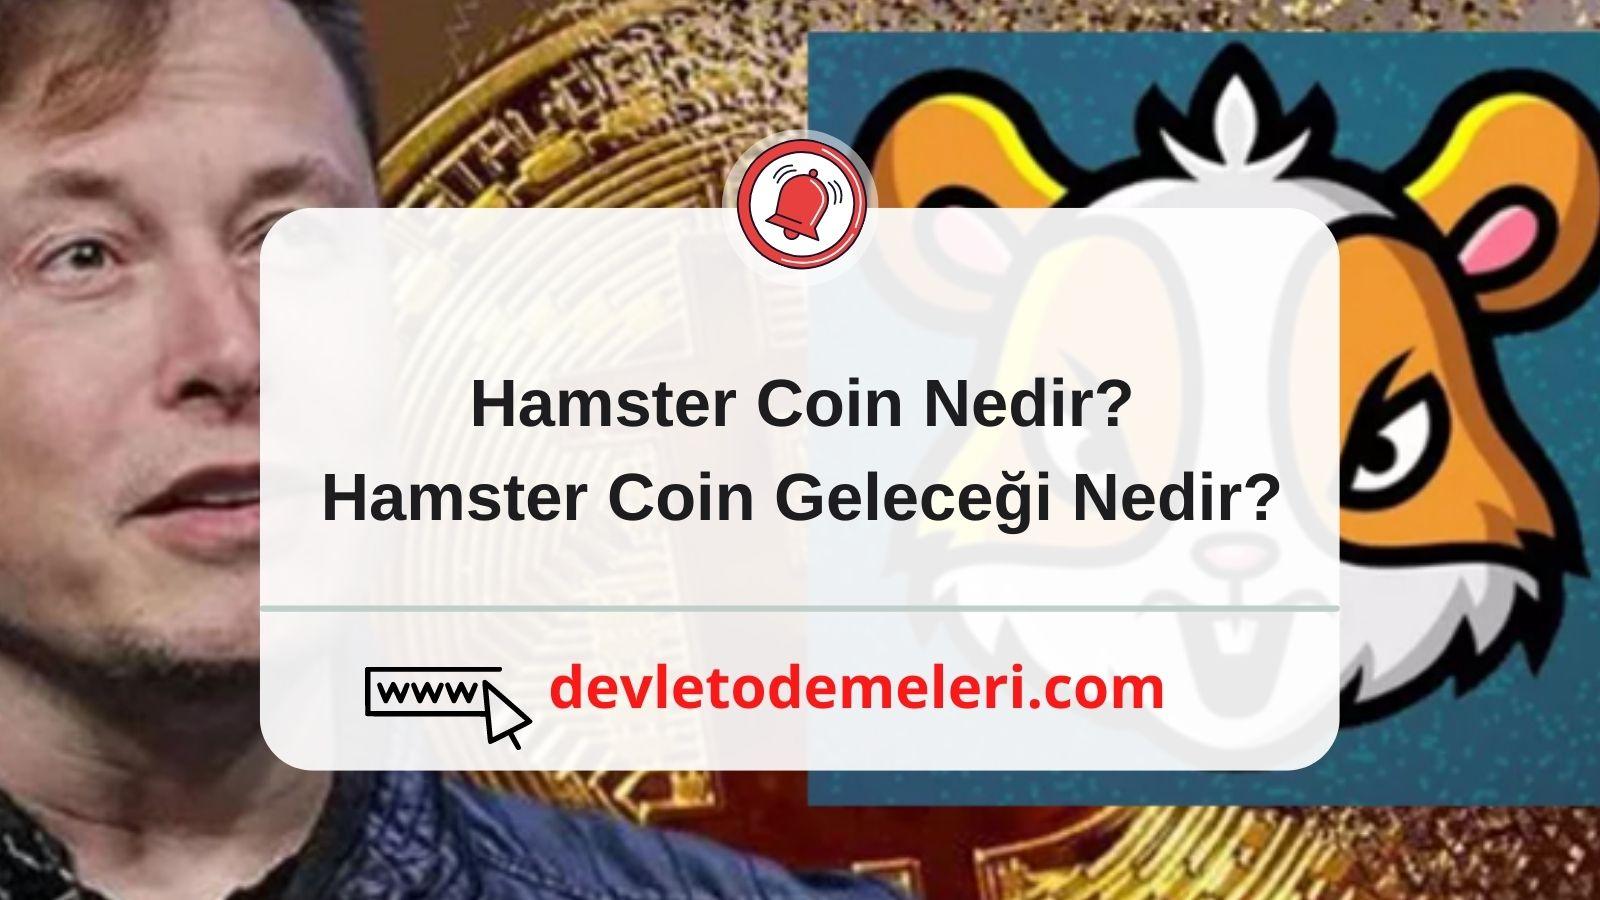 Hamster coin yorum